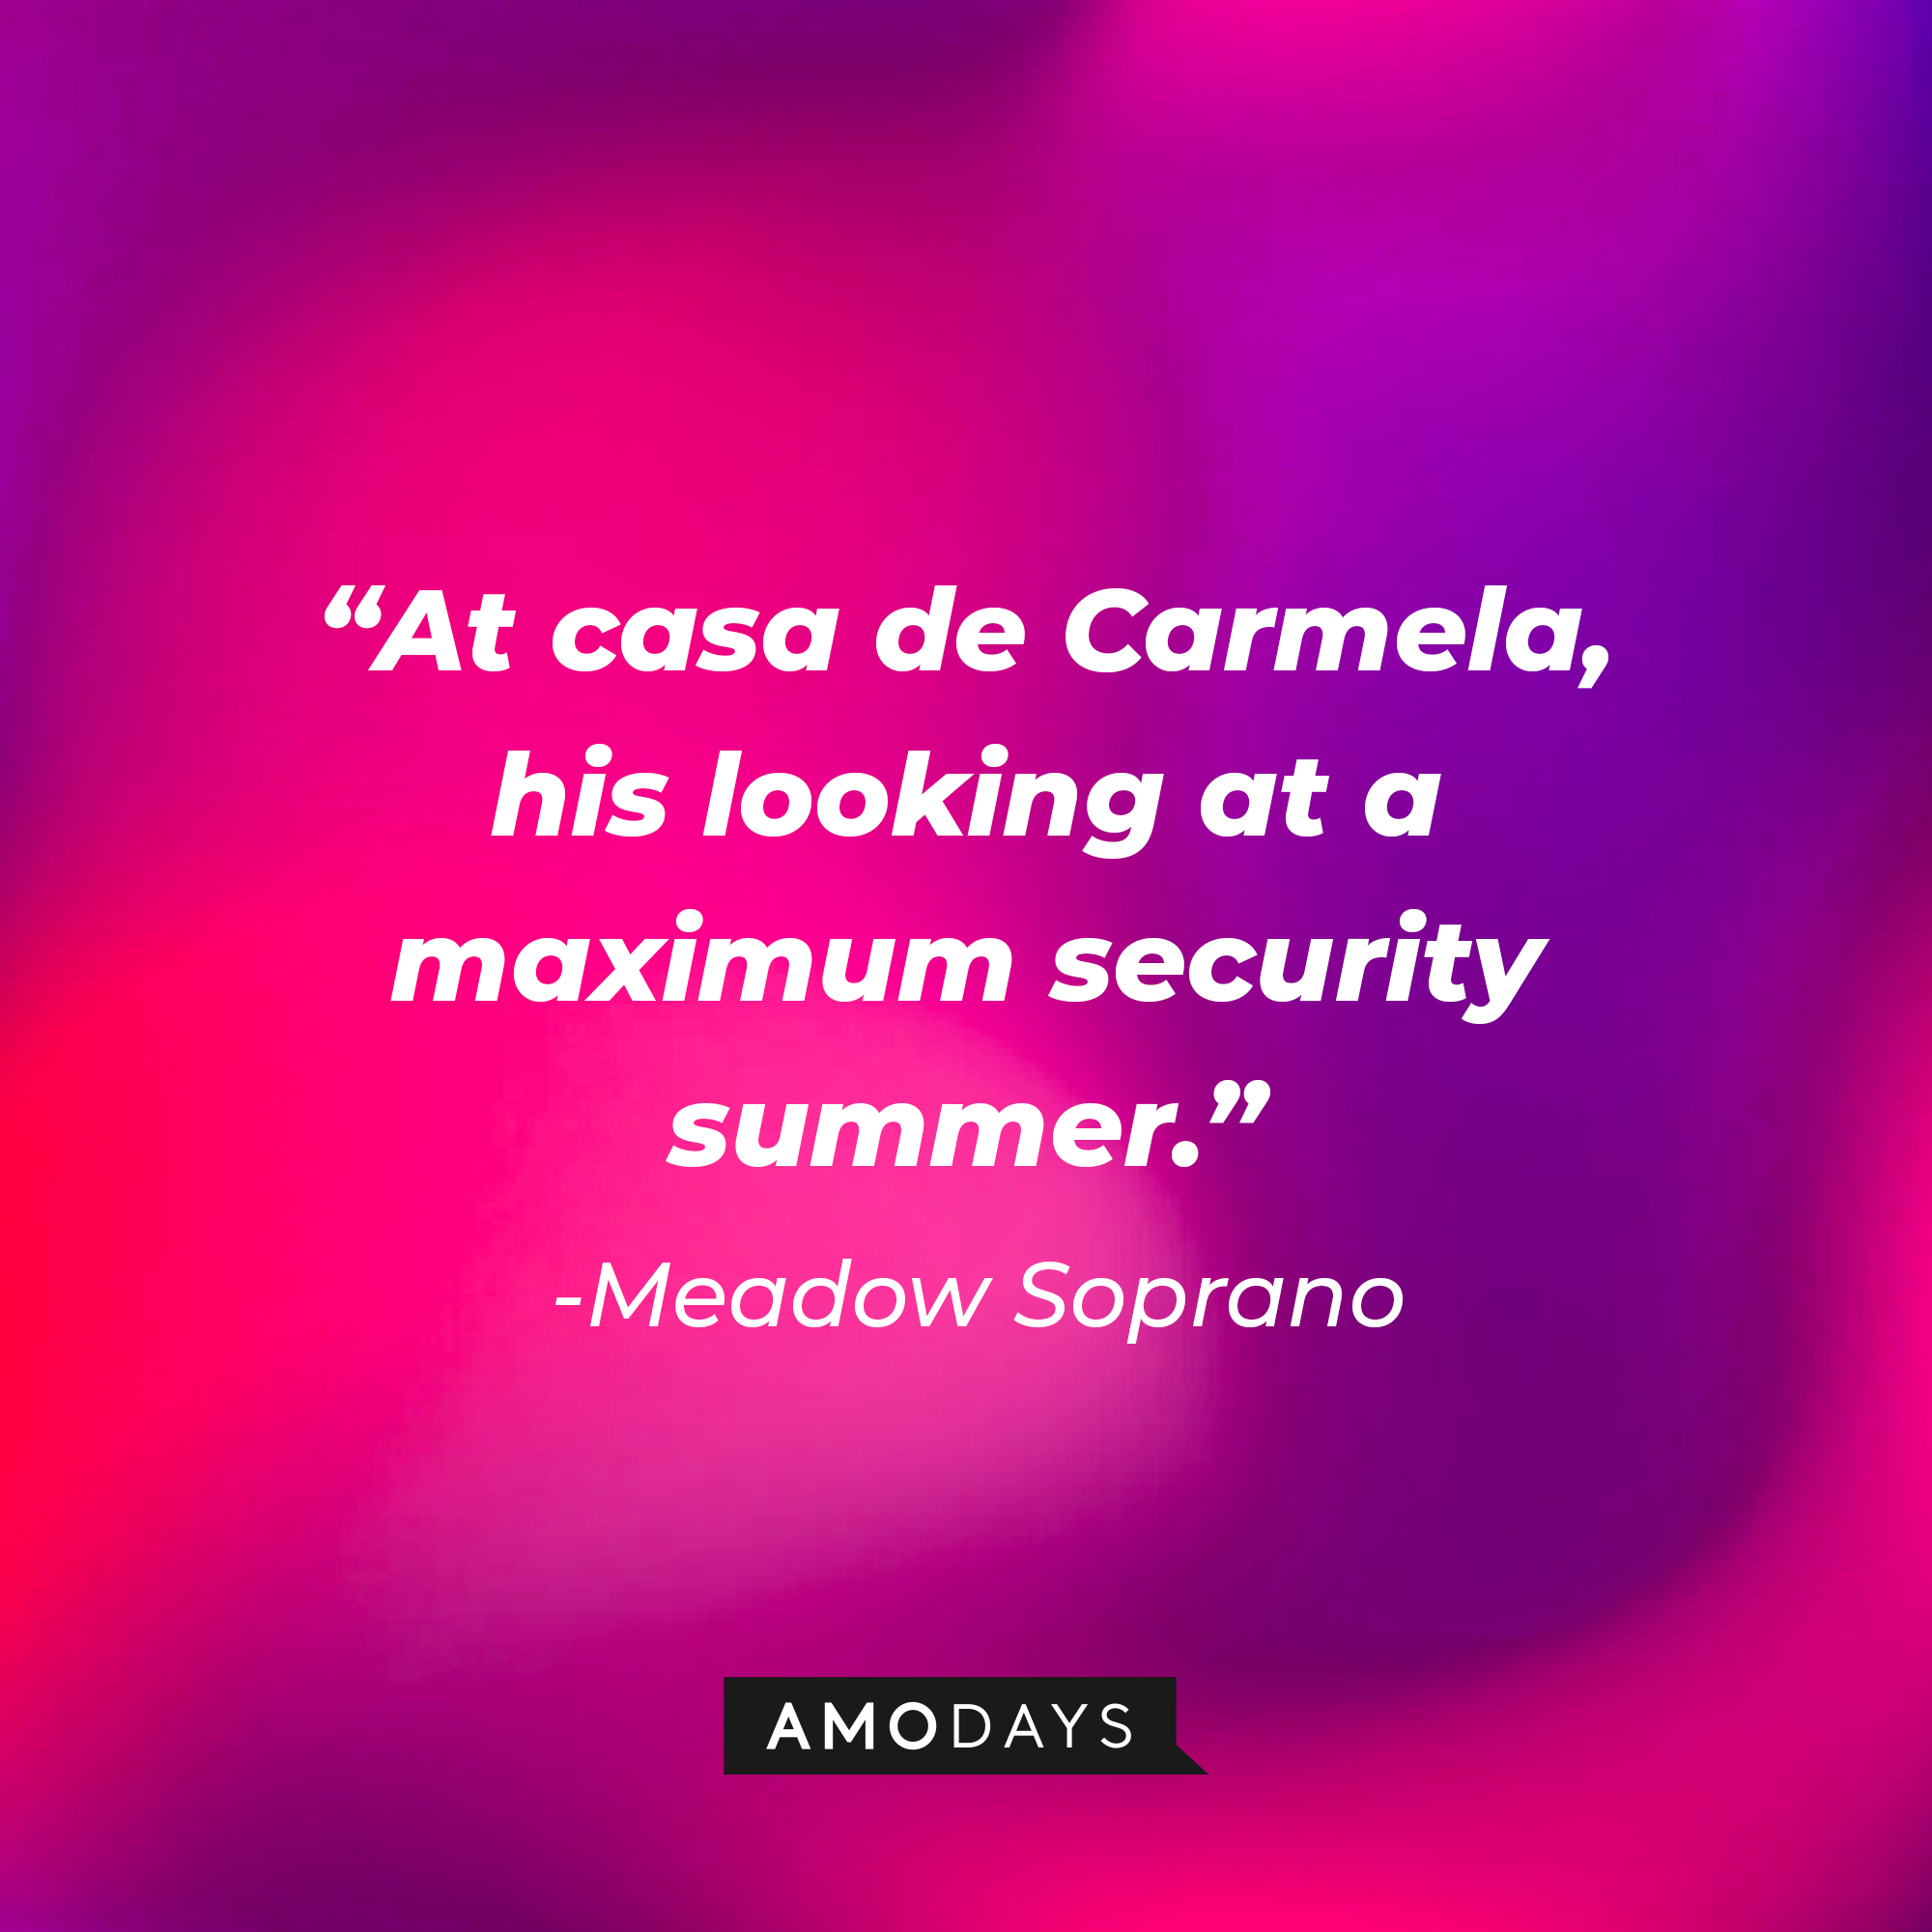 Meadow Soprano’s quote: “At casa de Carmela, his looking at a maximum security summer.” | Source: AmoDays